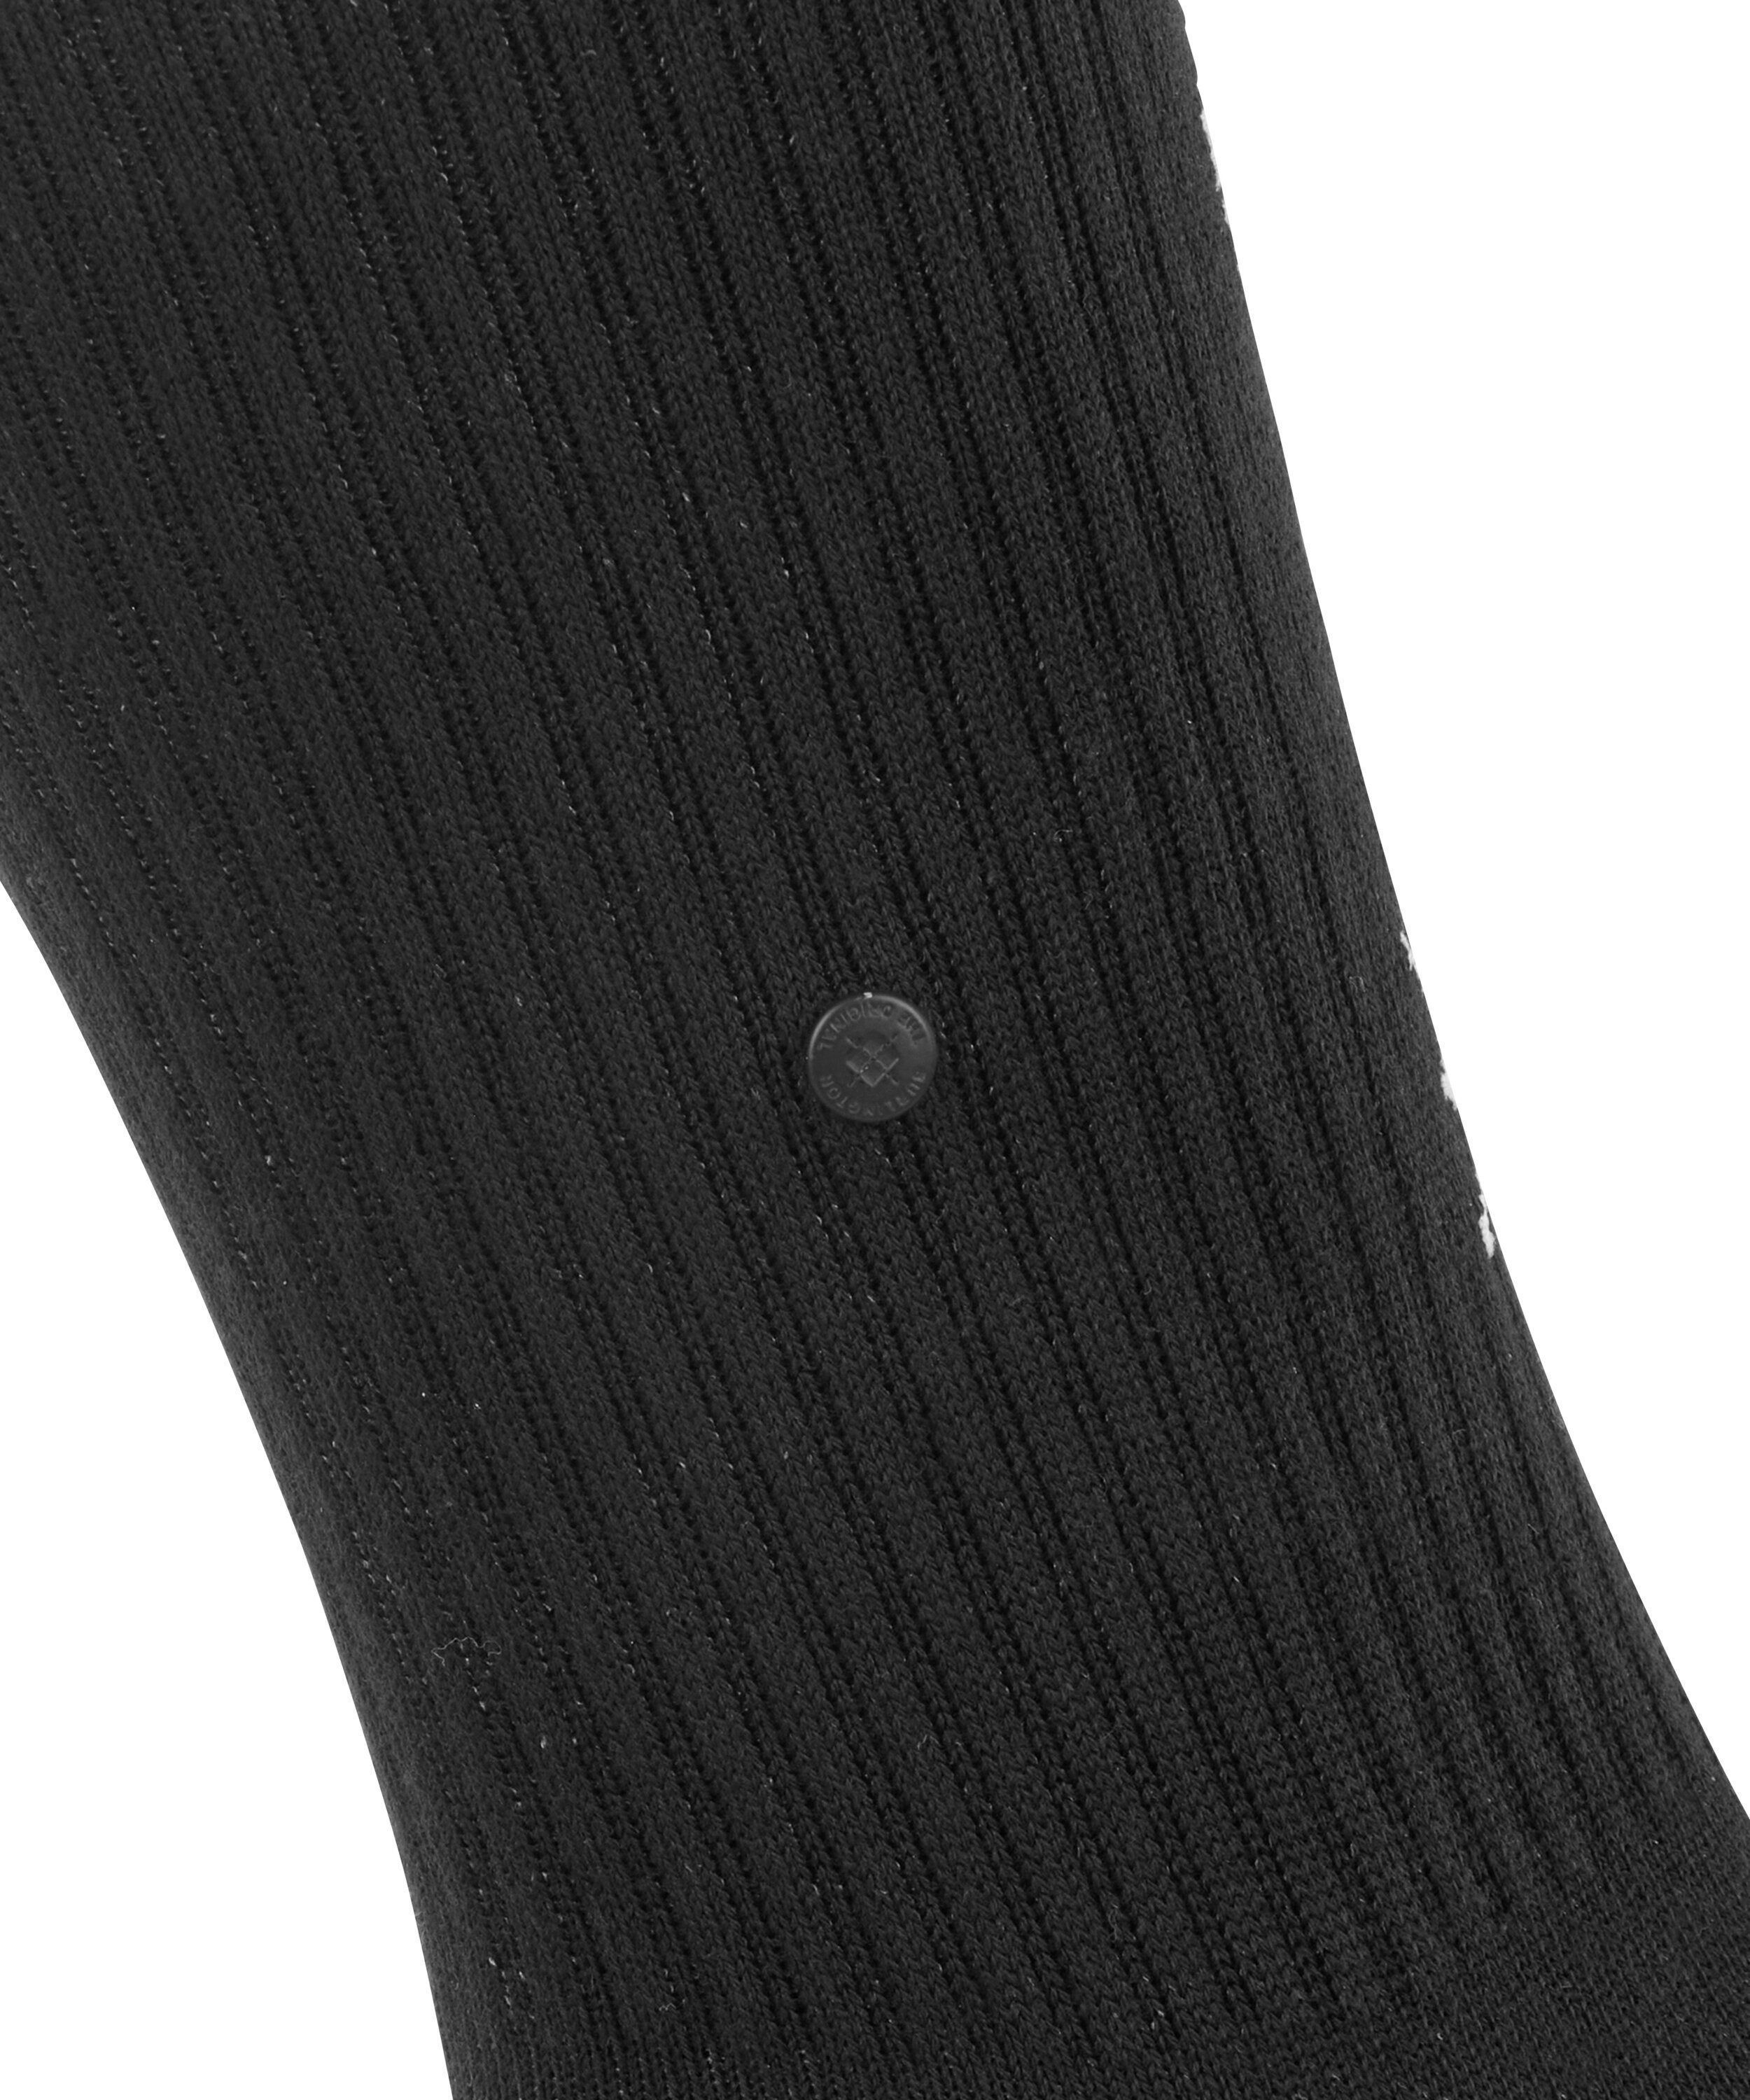 Burlington Socken Black Logo (1-Paar) black (3000)